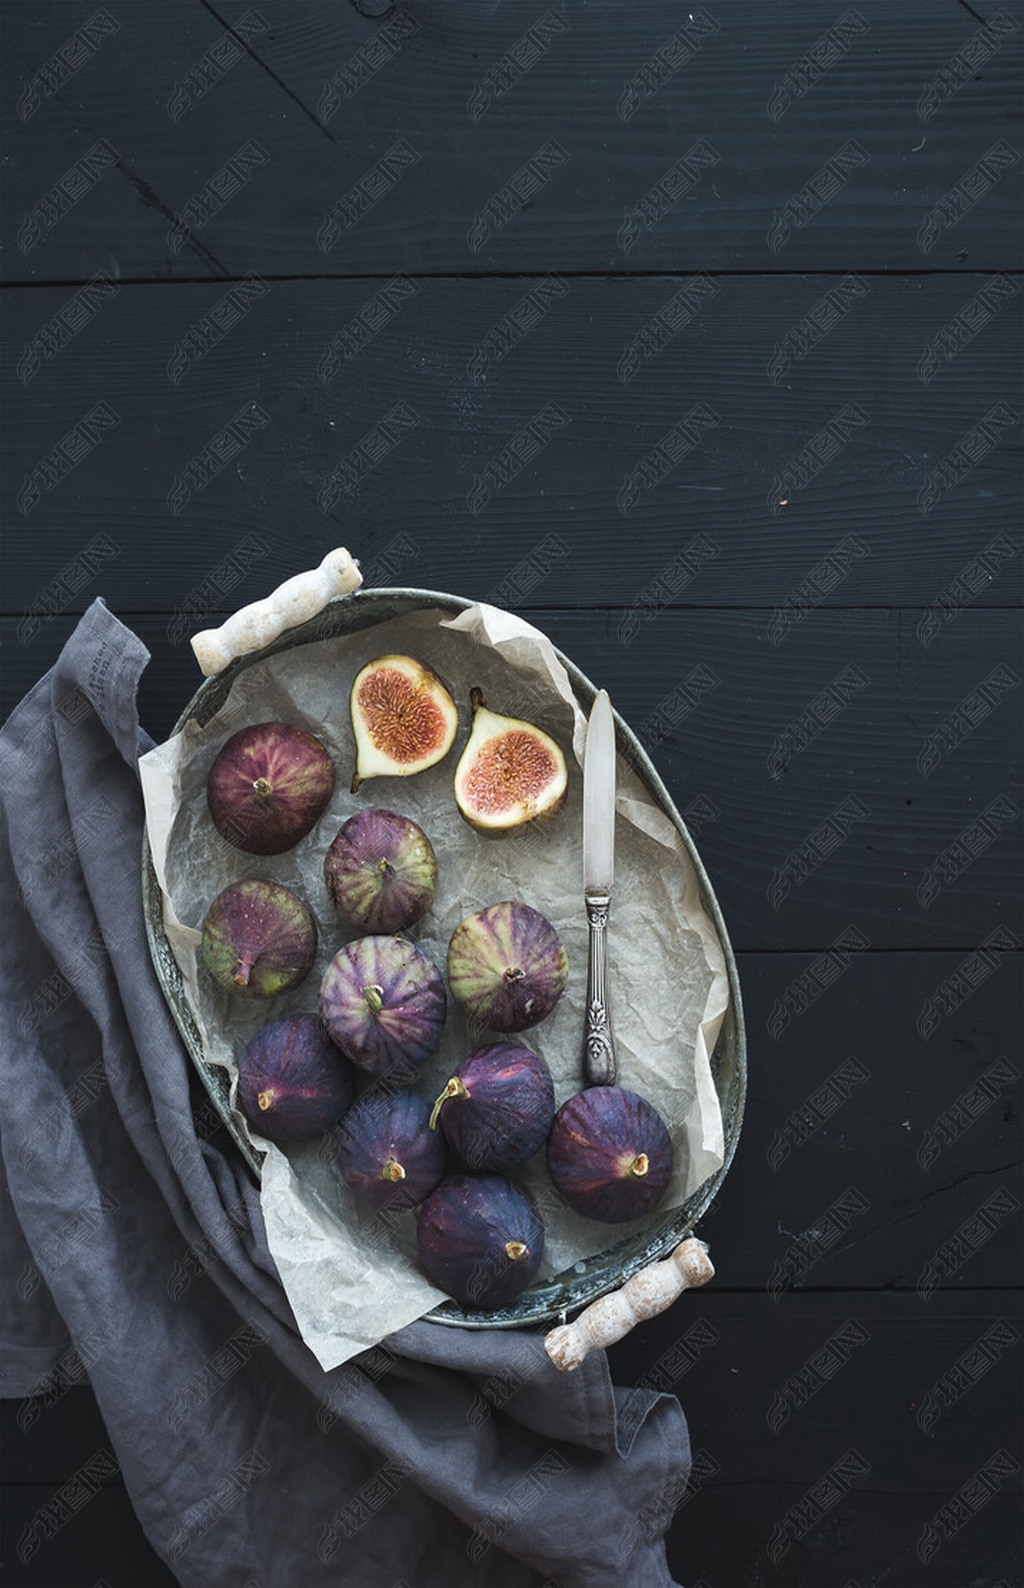 Vintage metal tray of fresh figs